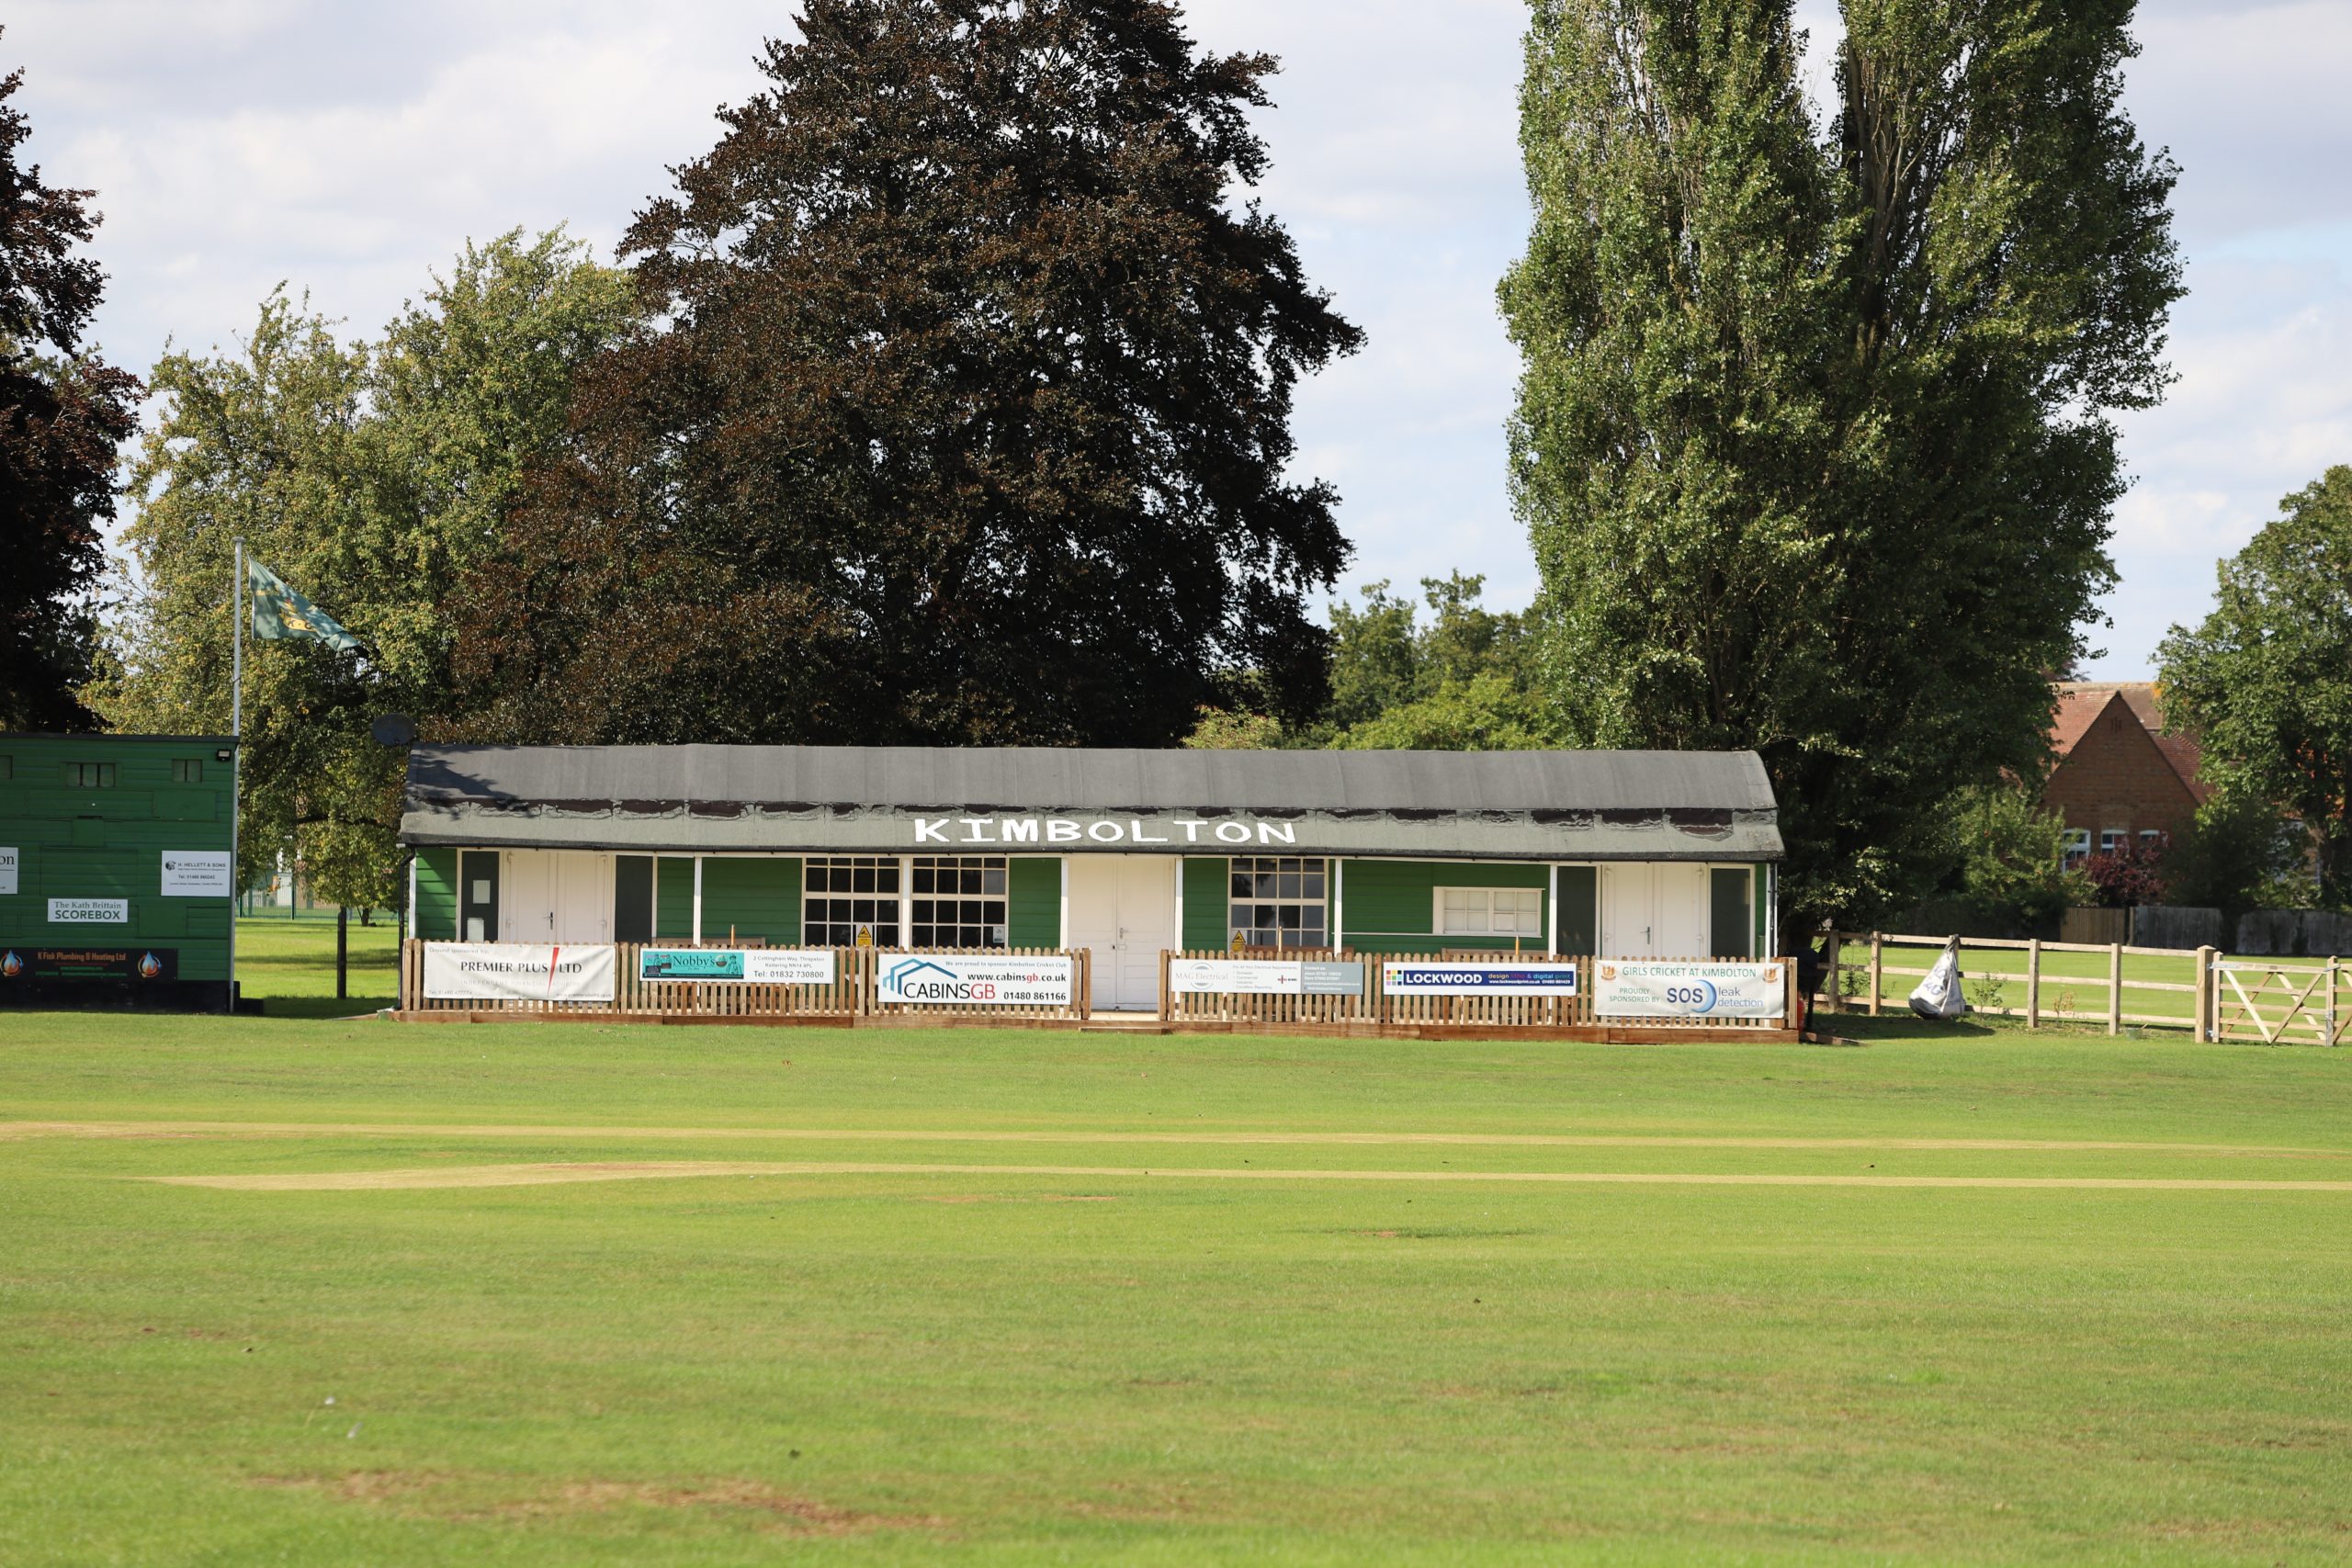 Kimbolton Cricket Club Pavilion.